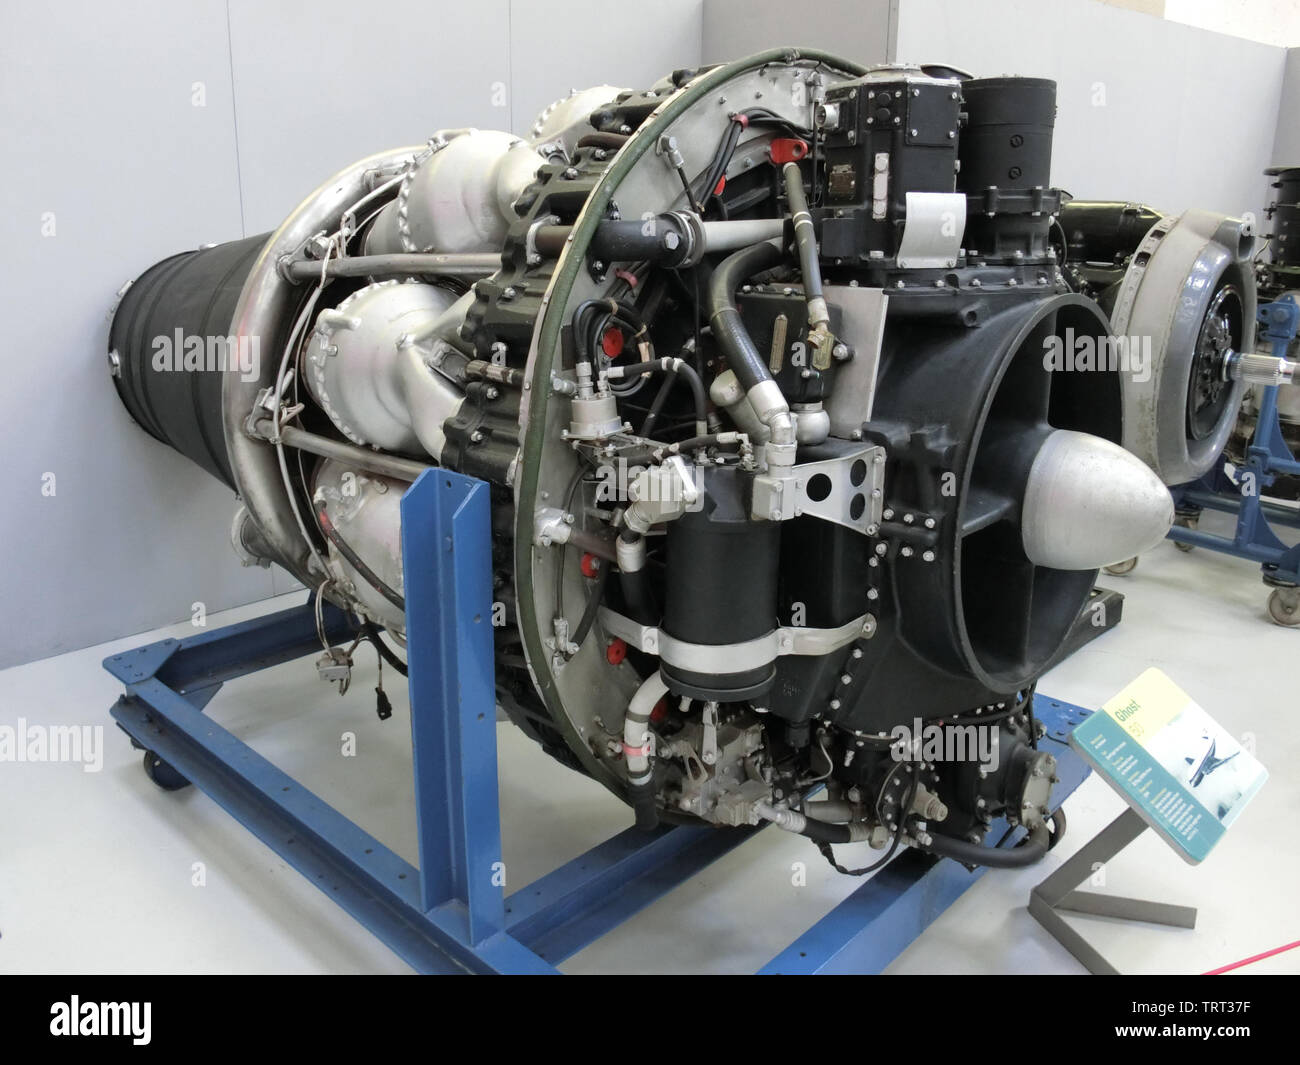 de Havilland Ghost 50 Turbojet Engine used in the de Havilland Comet, Venom & Sea Venom Stock Photo